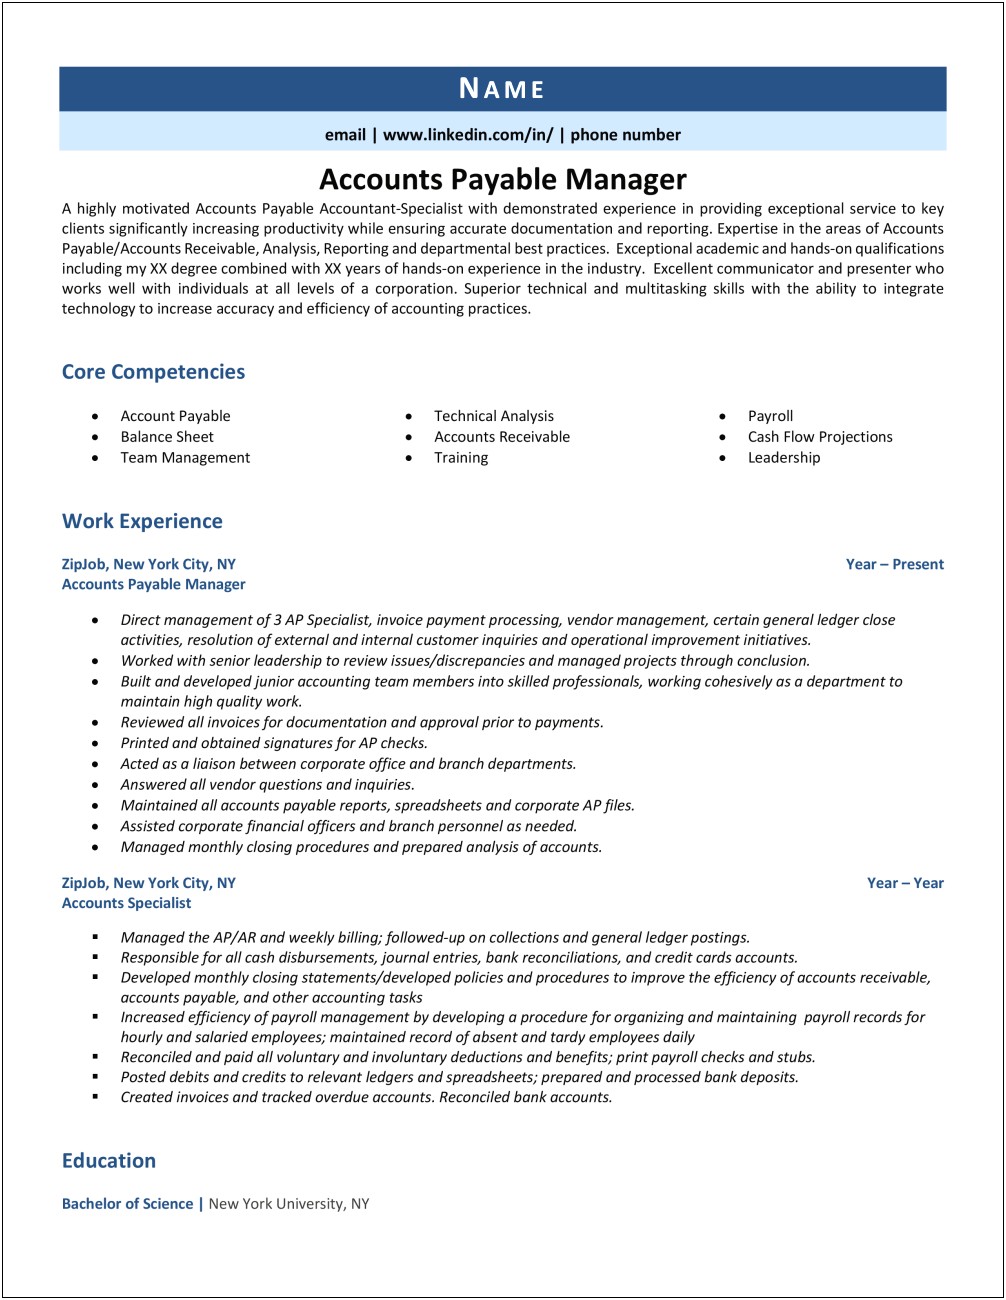 Accounts Payable Resume For Management Company Imagenes